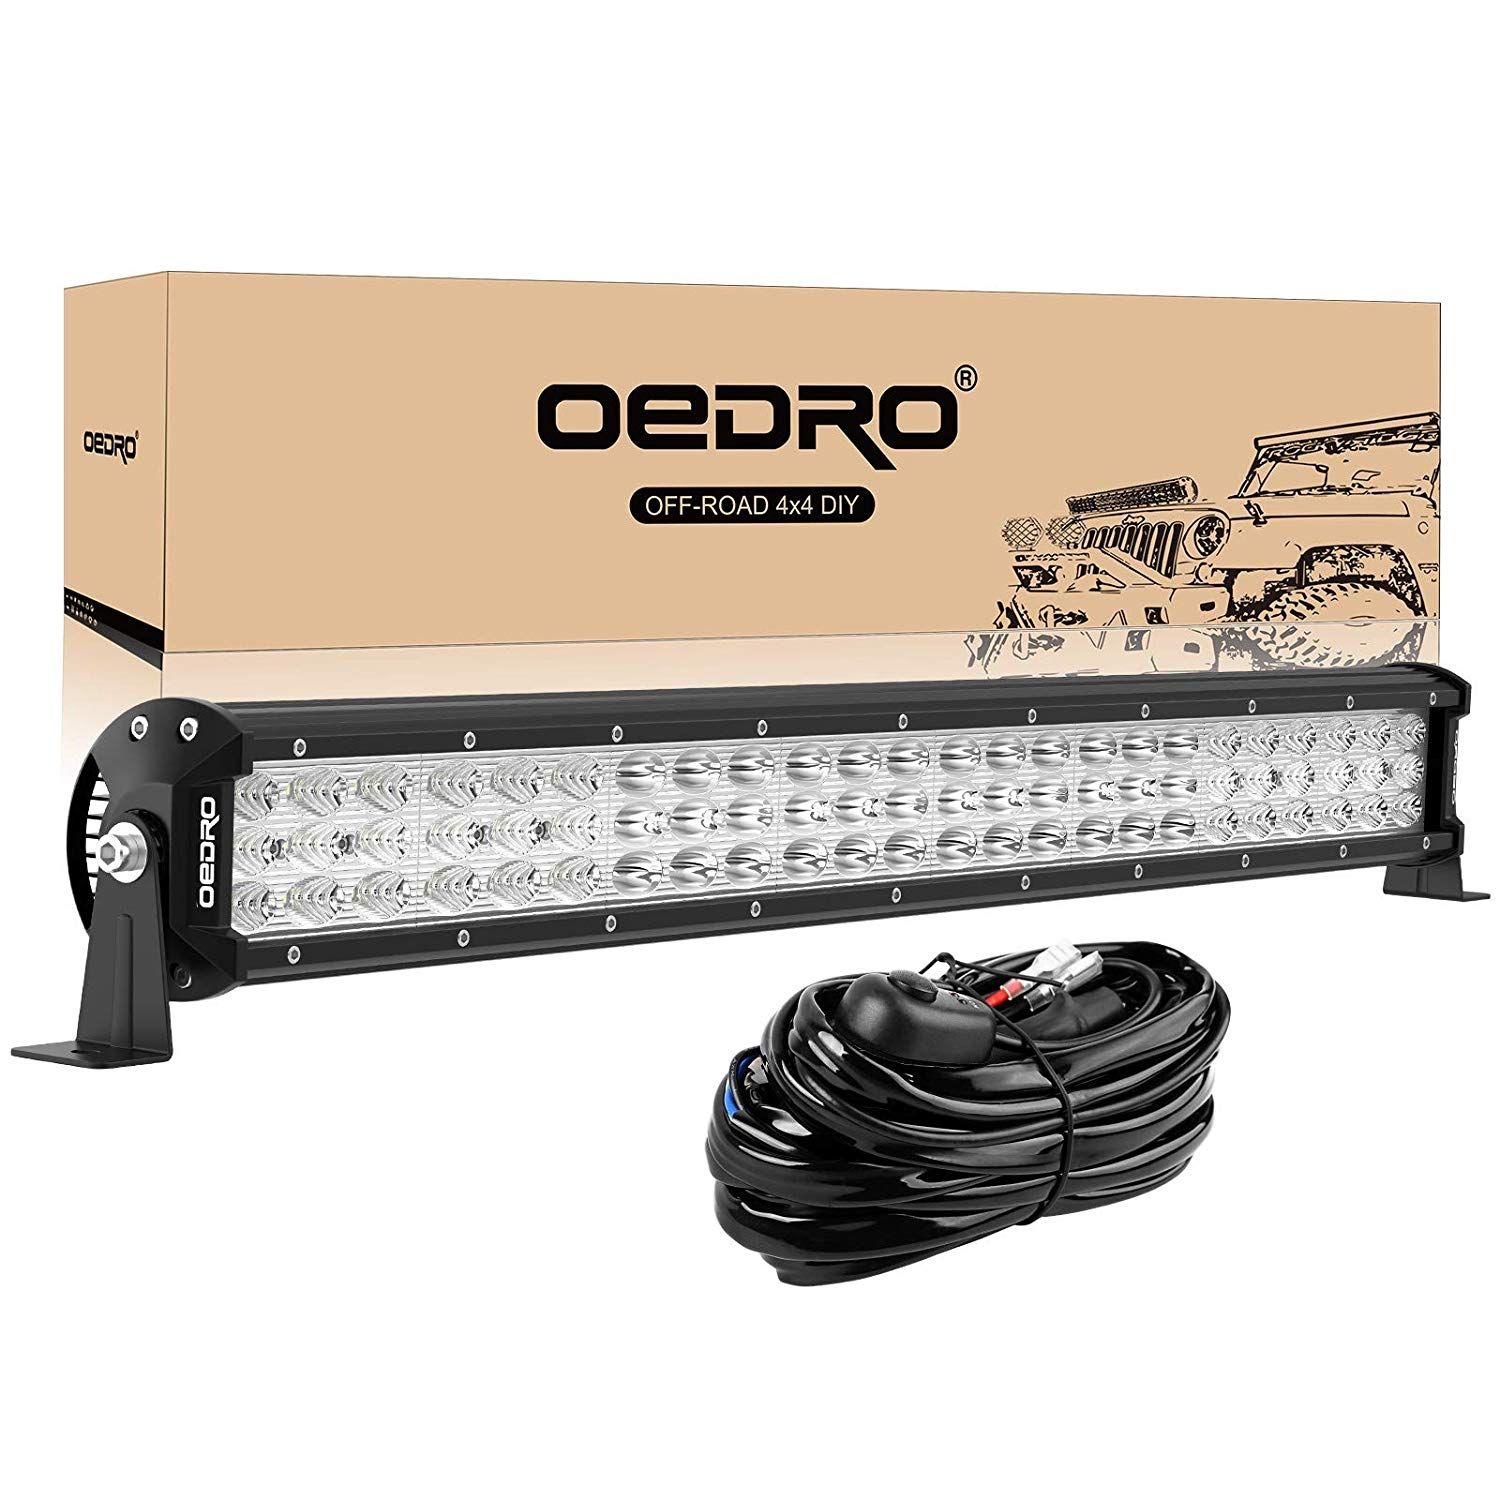 OEDRO? 22" 479W 52690LM Triple Row LED Light Bar Combo Off-Road Light & Wiring Harness